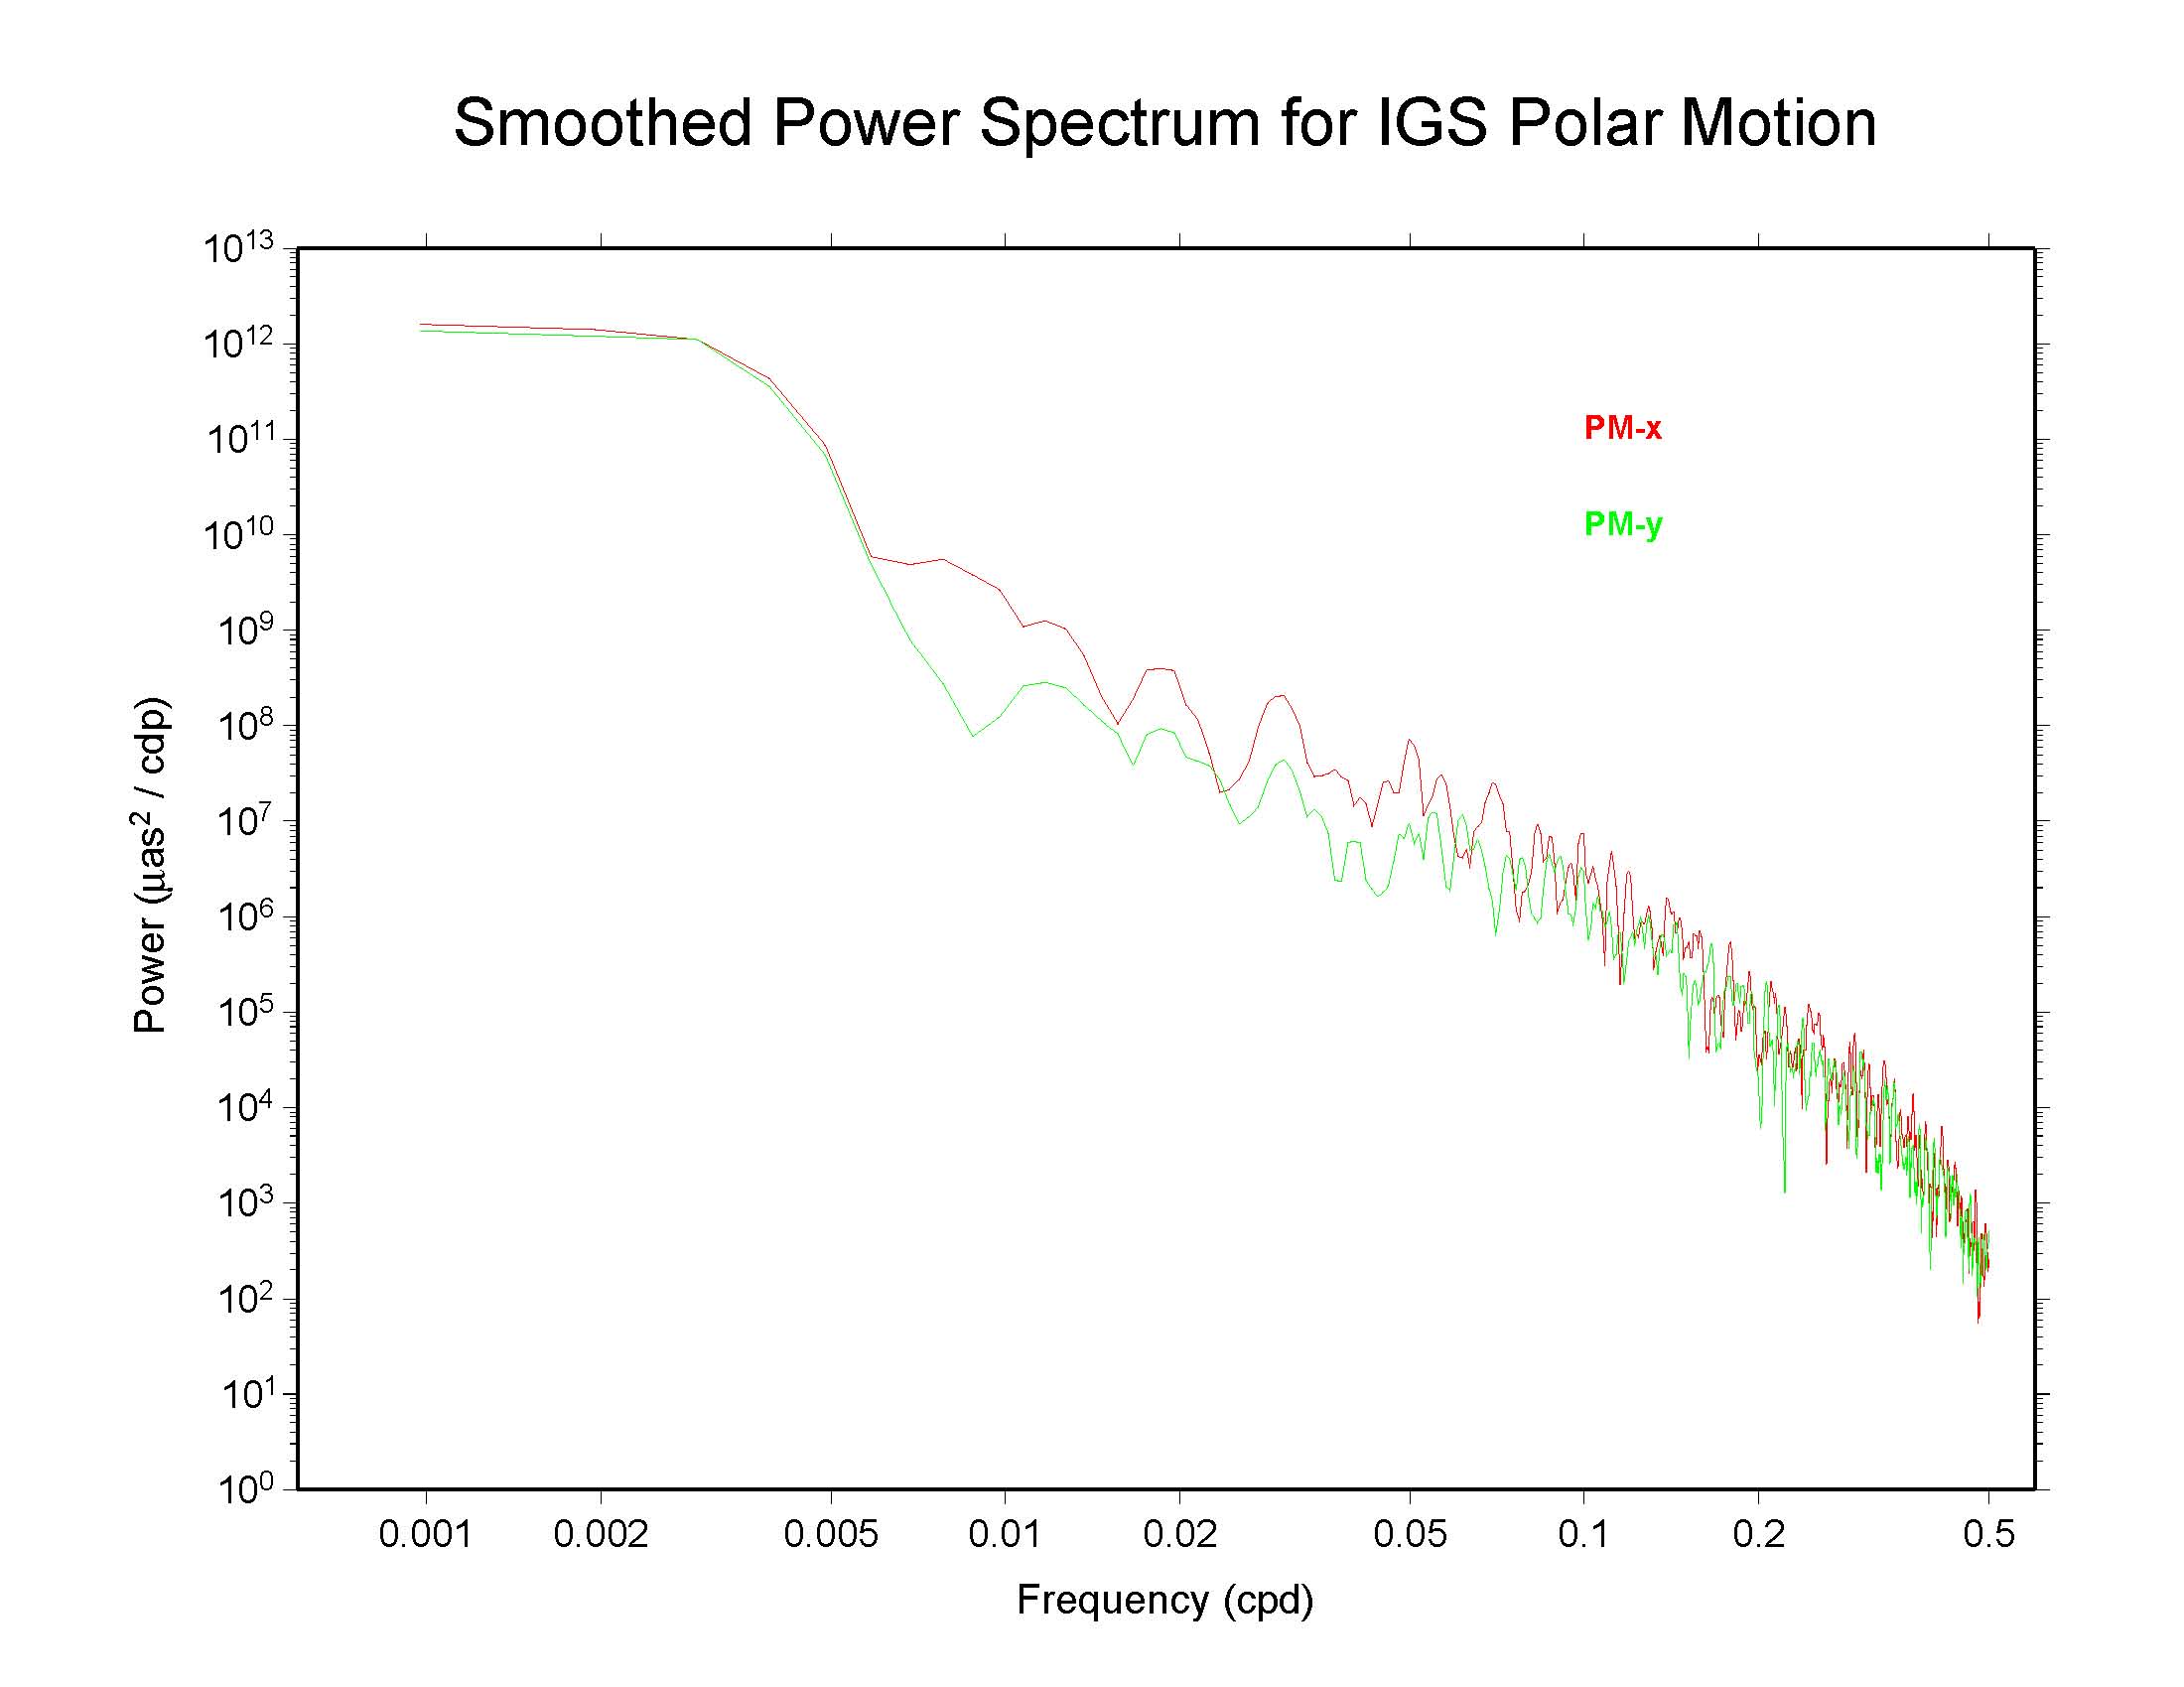 IGS polar motion spectra